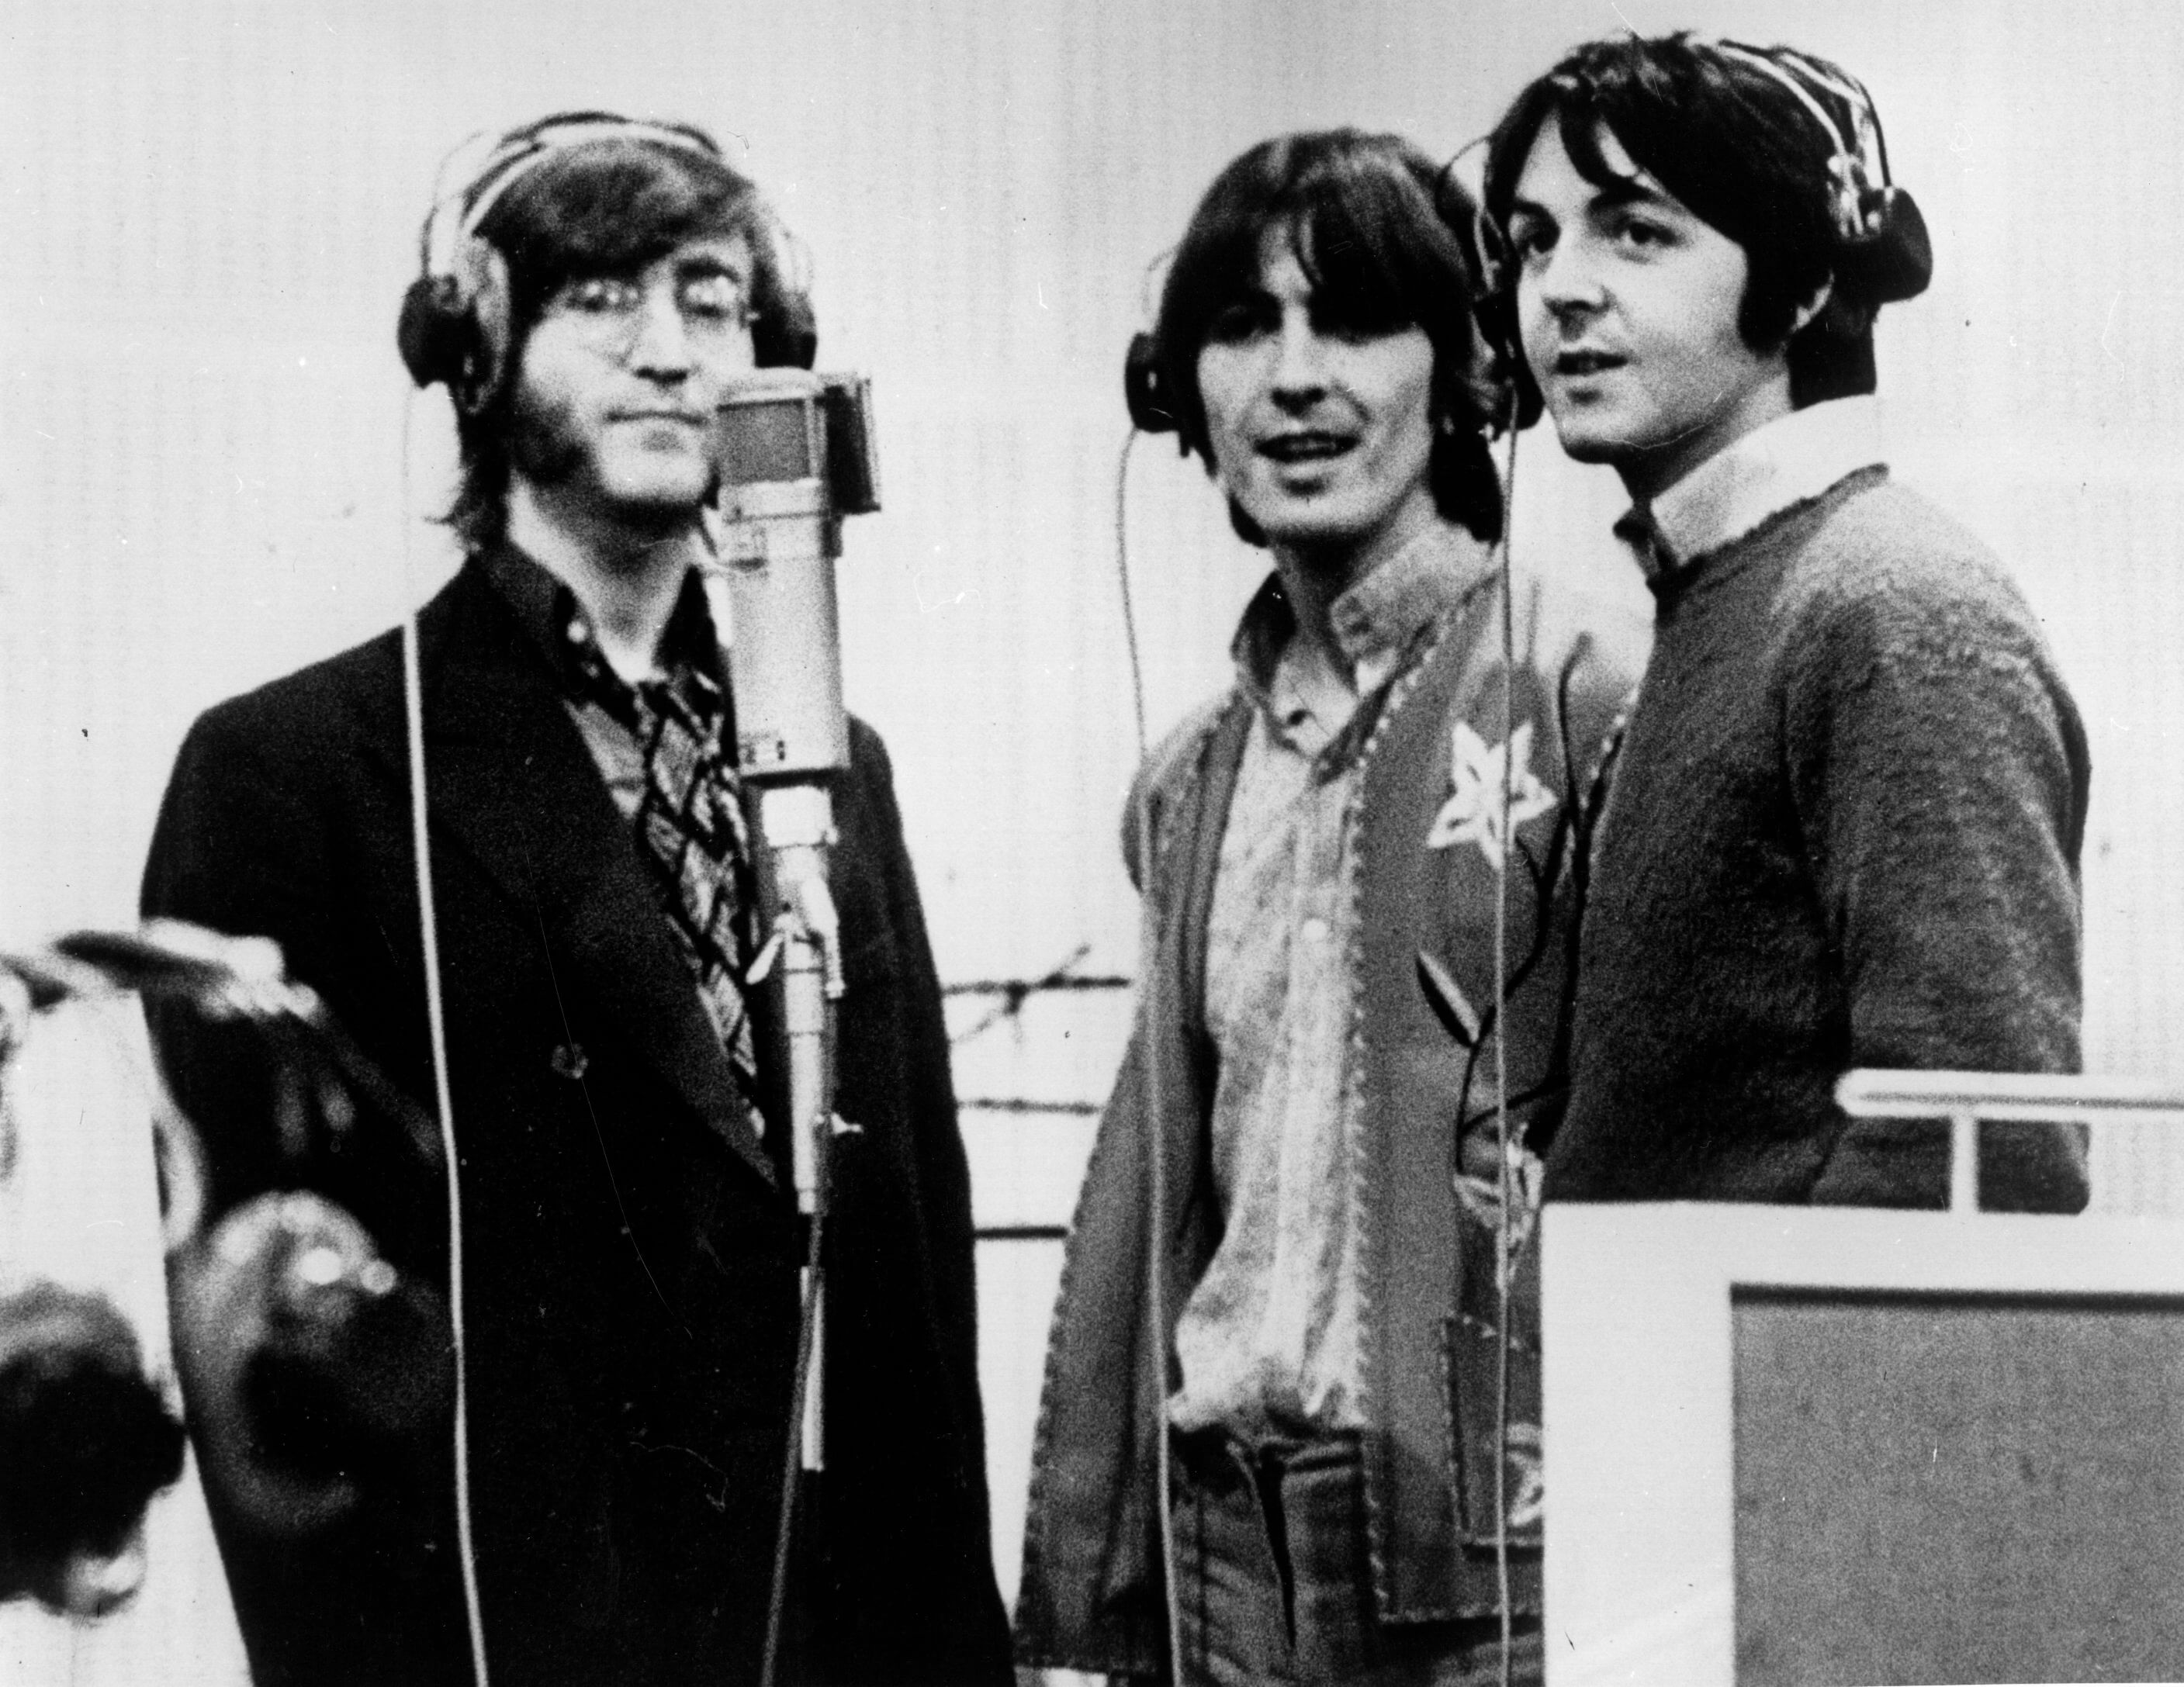 The Beatles' John Lennon, George Harrison, and Paul McCartney in black-and-white